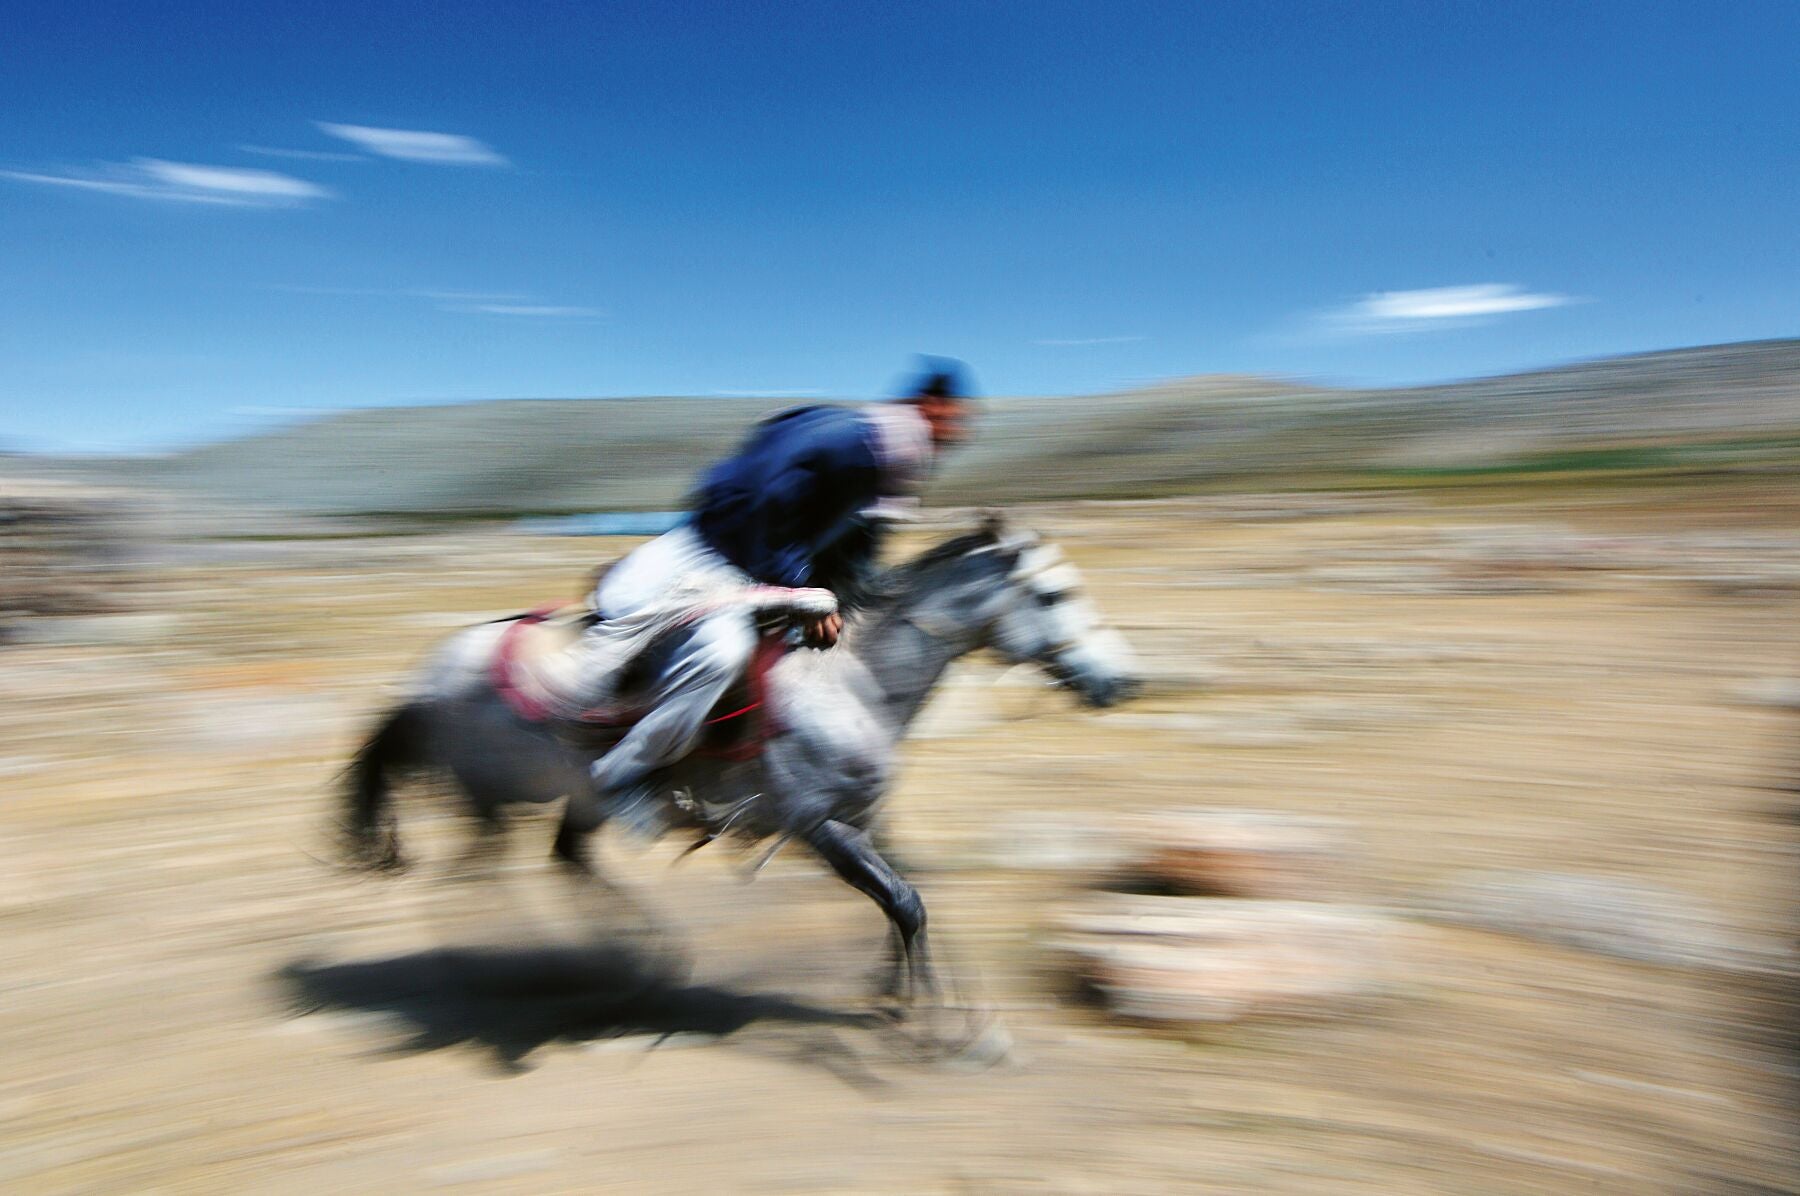 Afghan Horseman, 2011